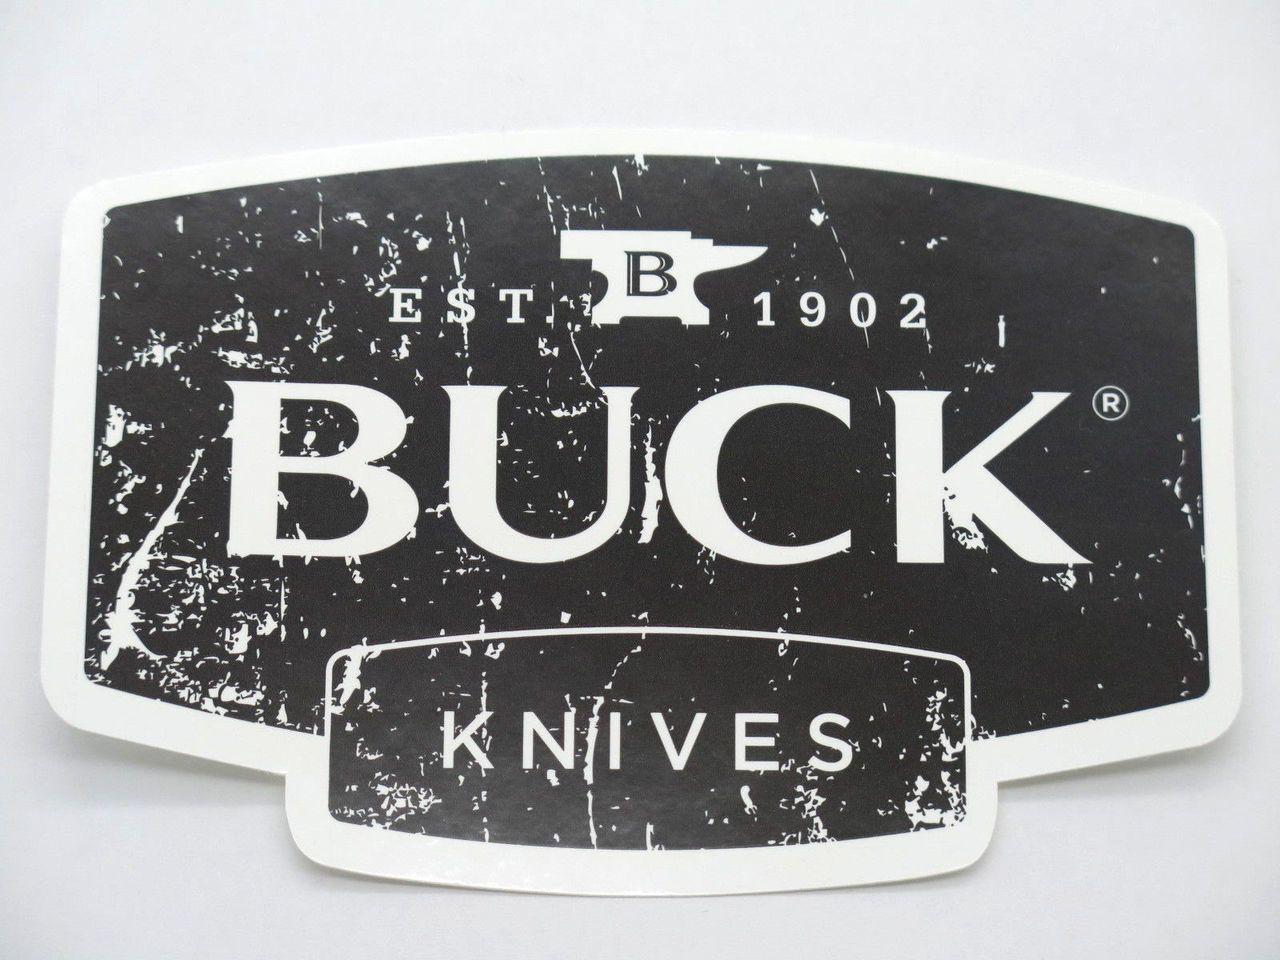 Faded Logo - BUCK KNIVES FADED LOGO WINDOW / BUMPER STICKER 110 112 119 COLLECTOR GIFT